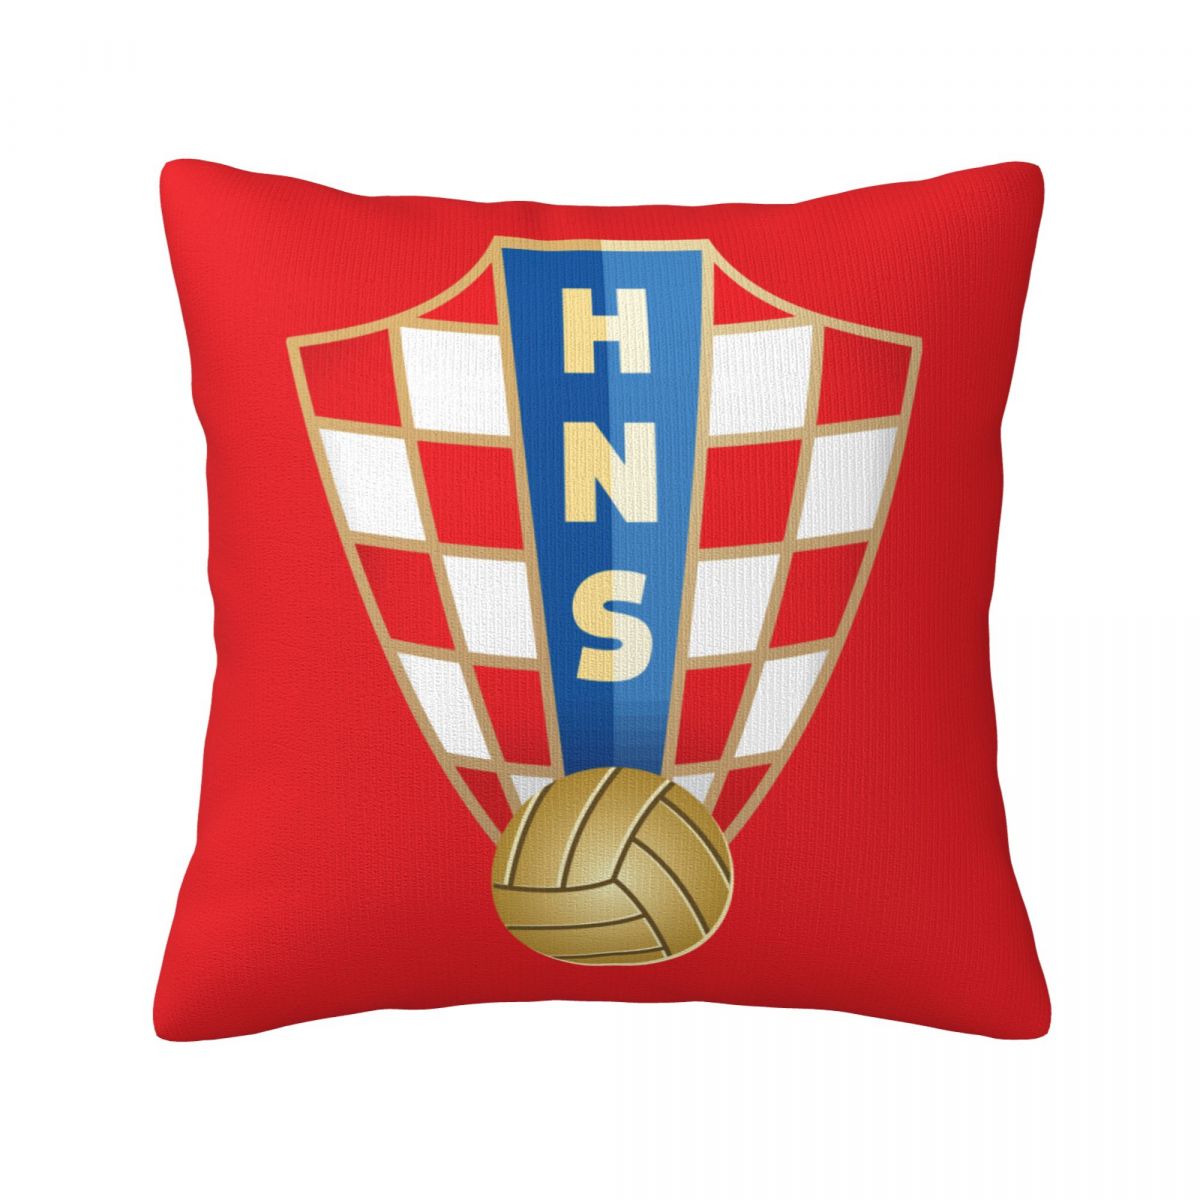 Croatia National Football Team Throw Pillow Covers 18x18